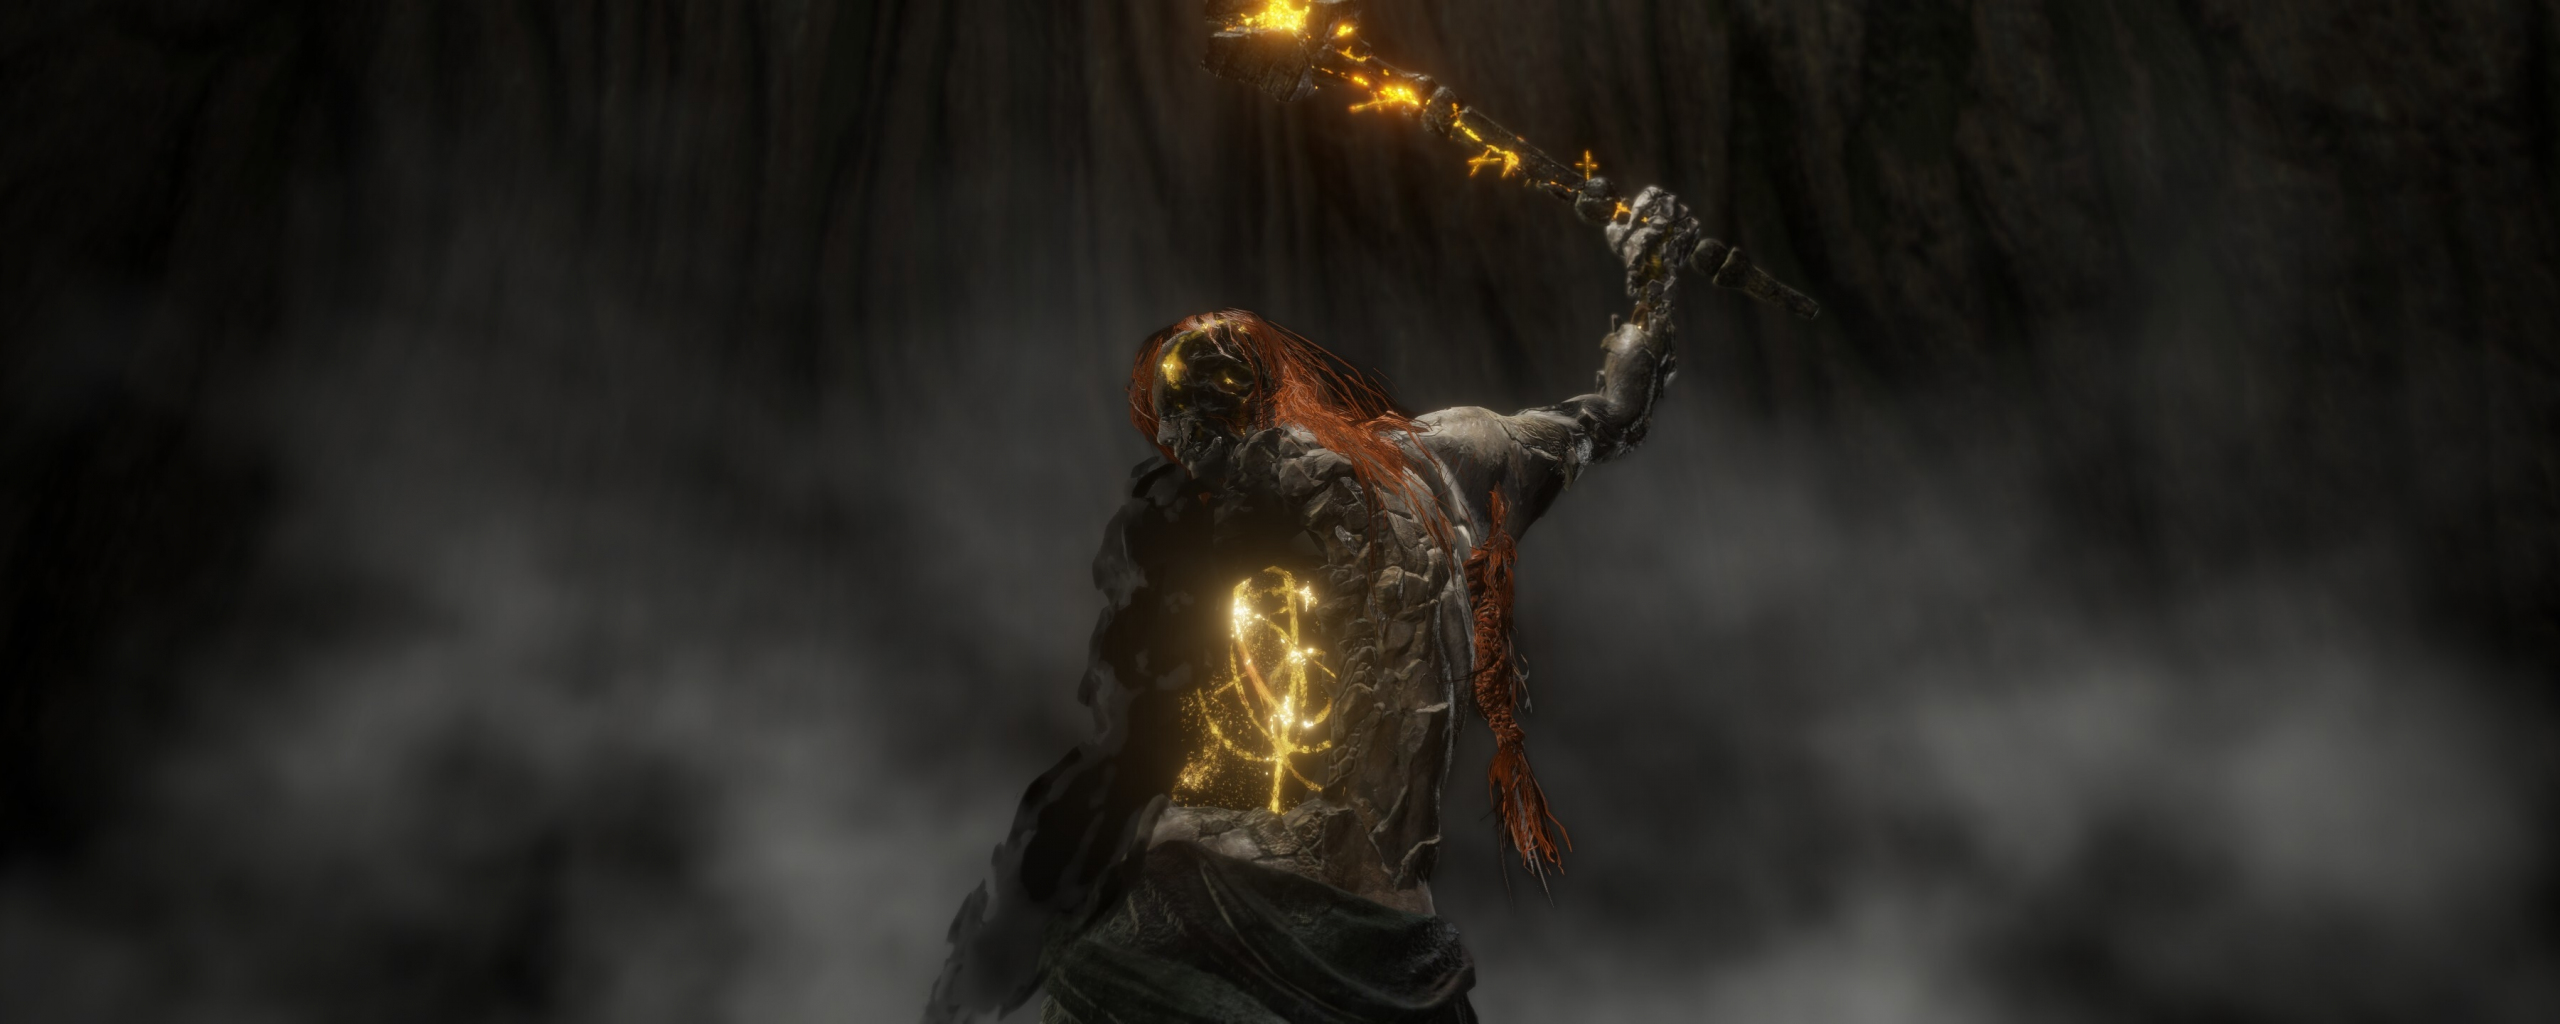 Warrior fire, Elden Ring, game, 2560x1024 wallpaper